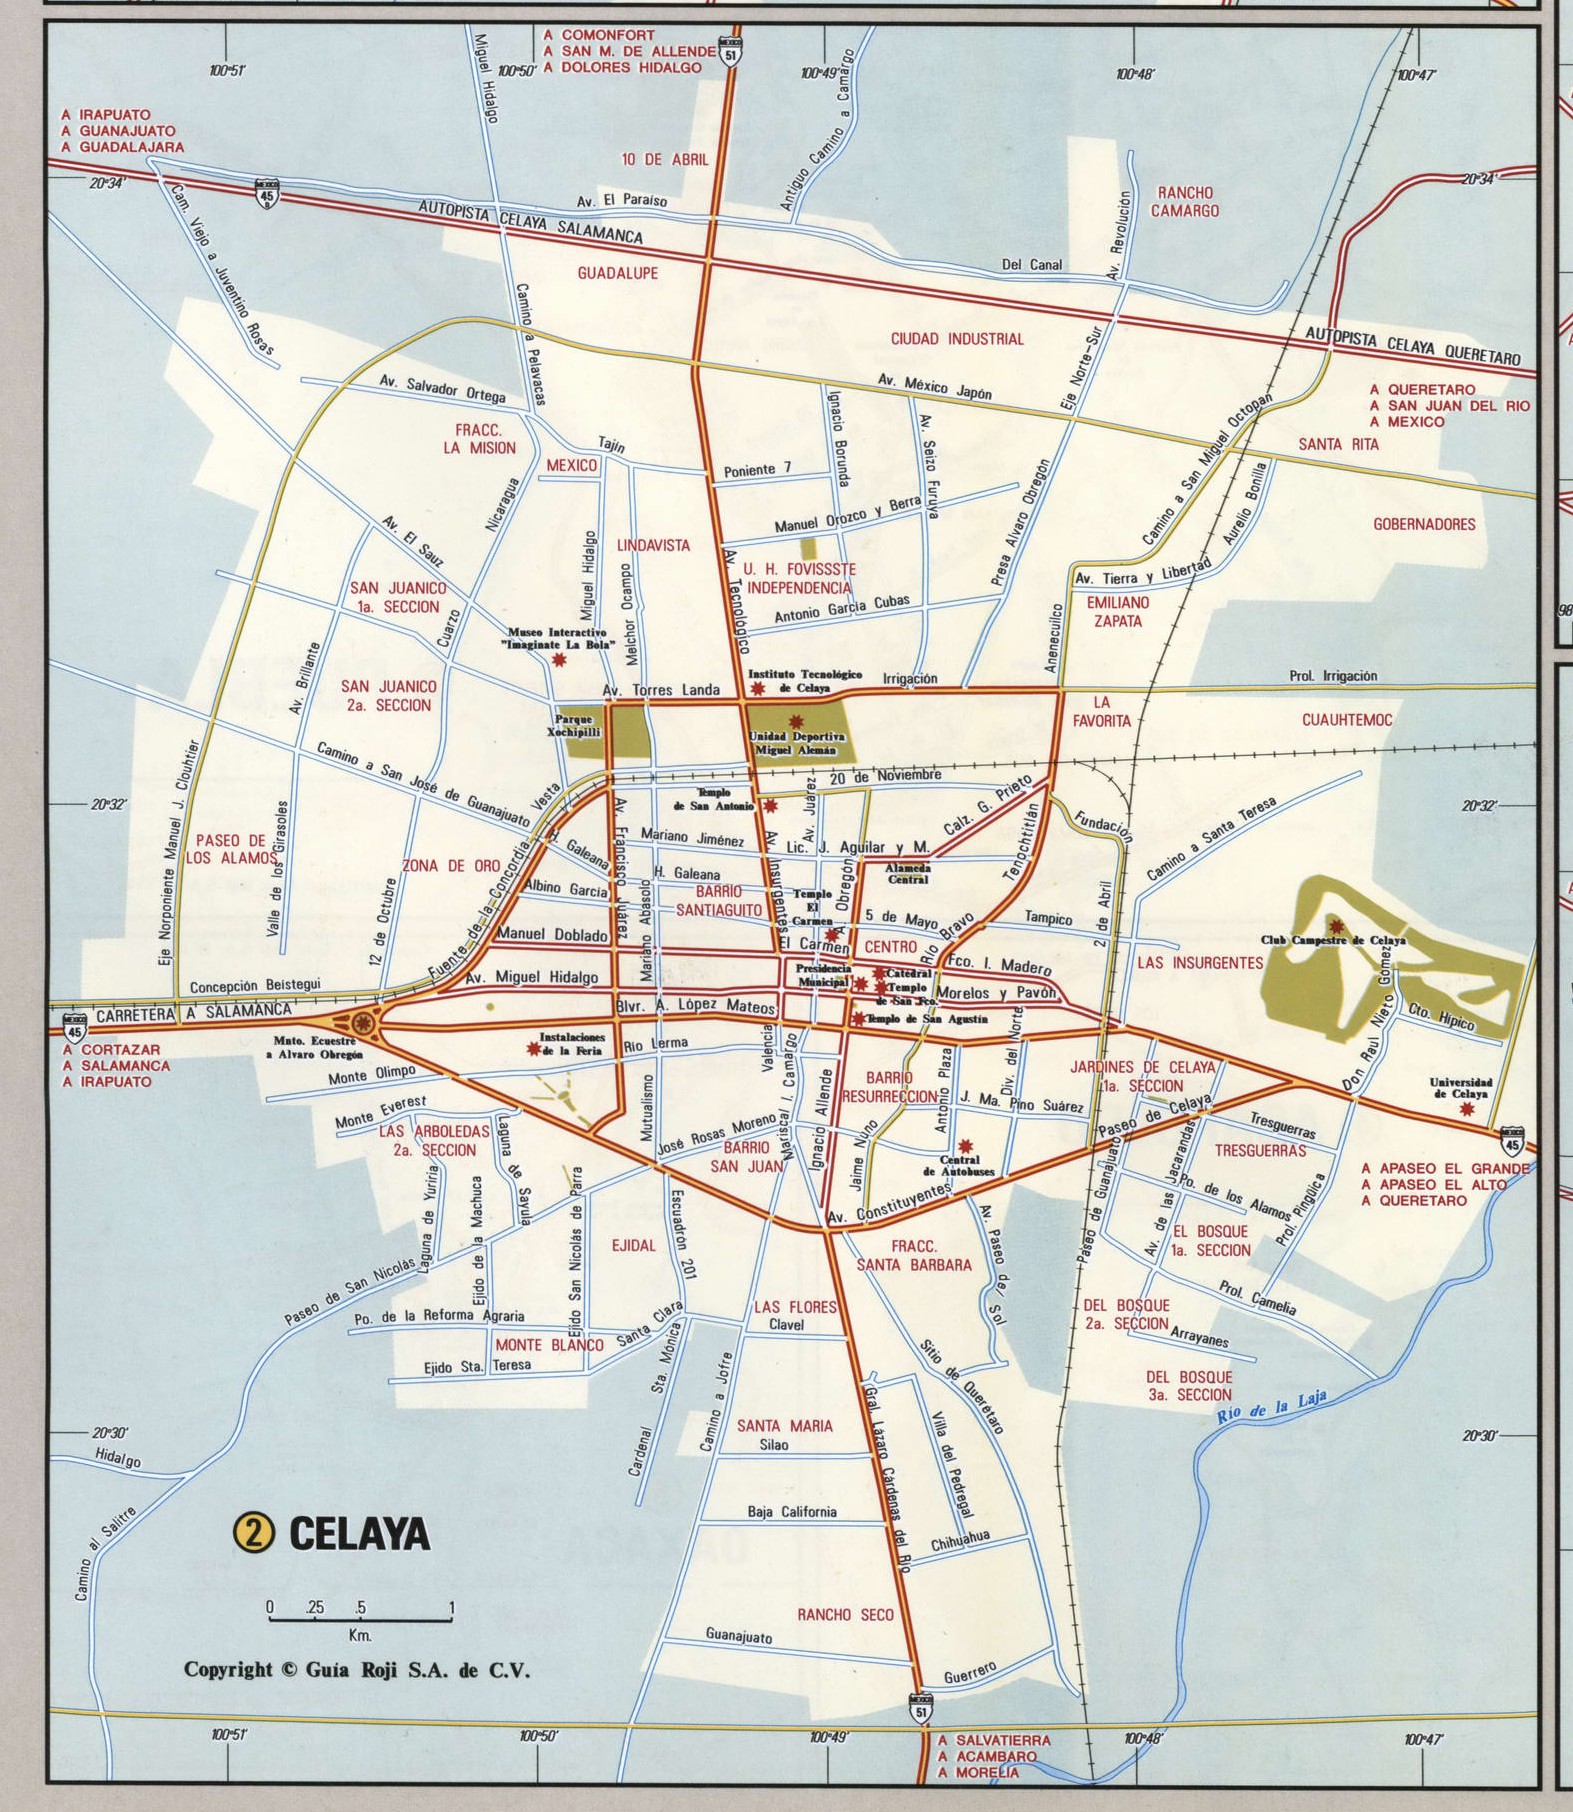 Celaya city map